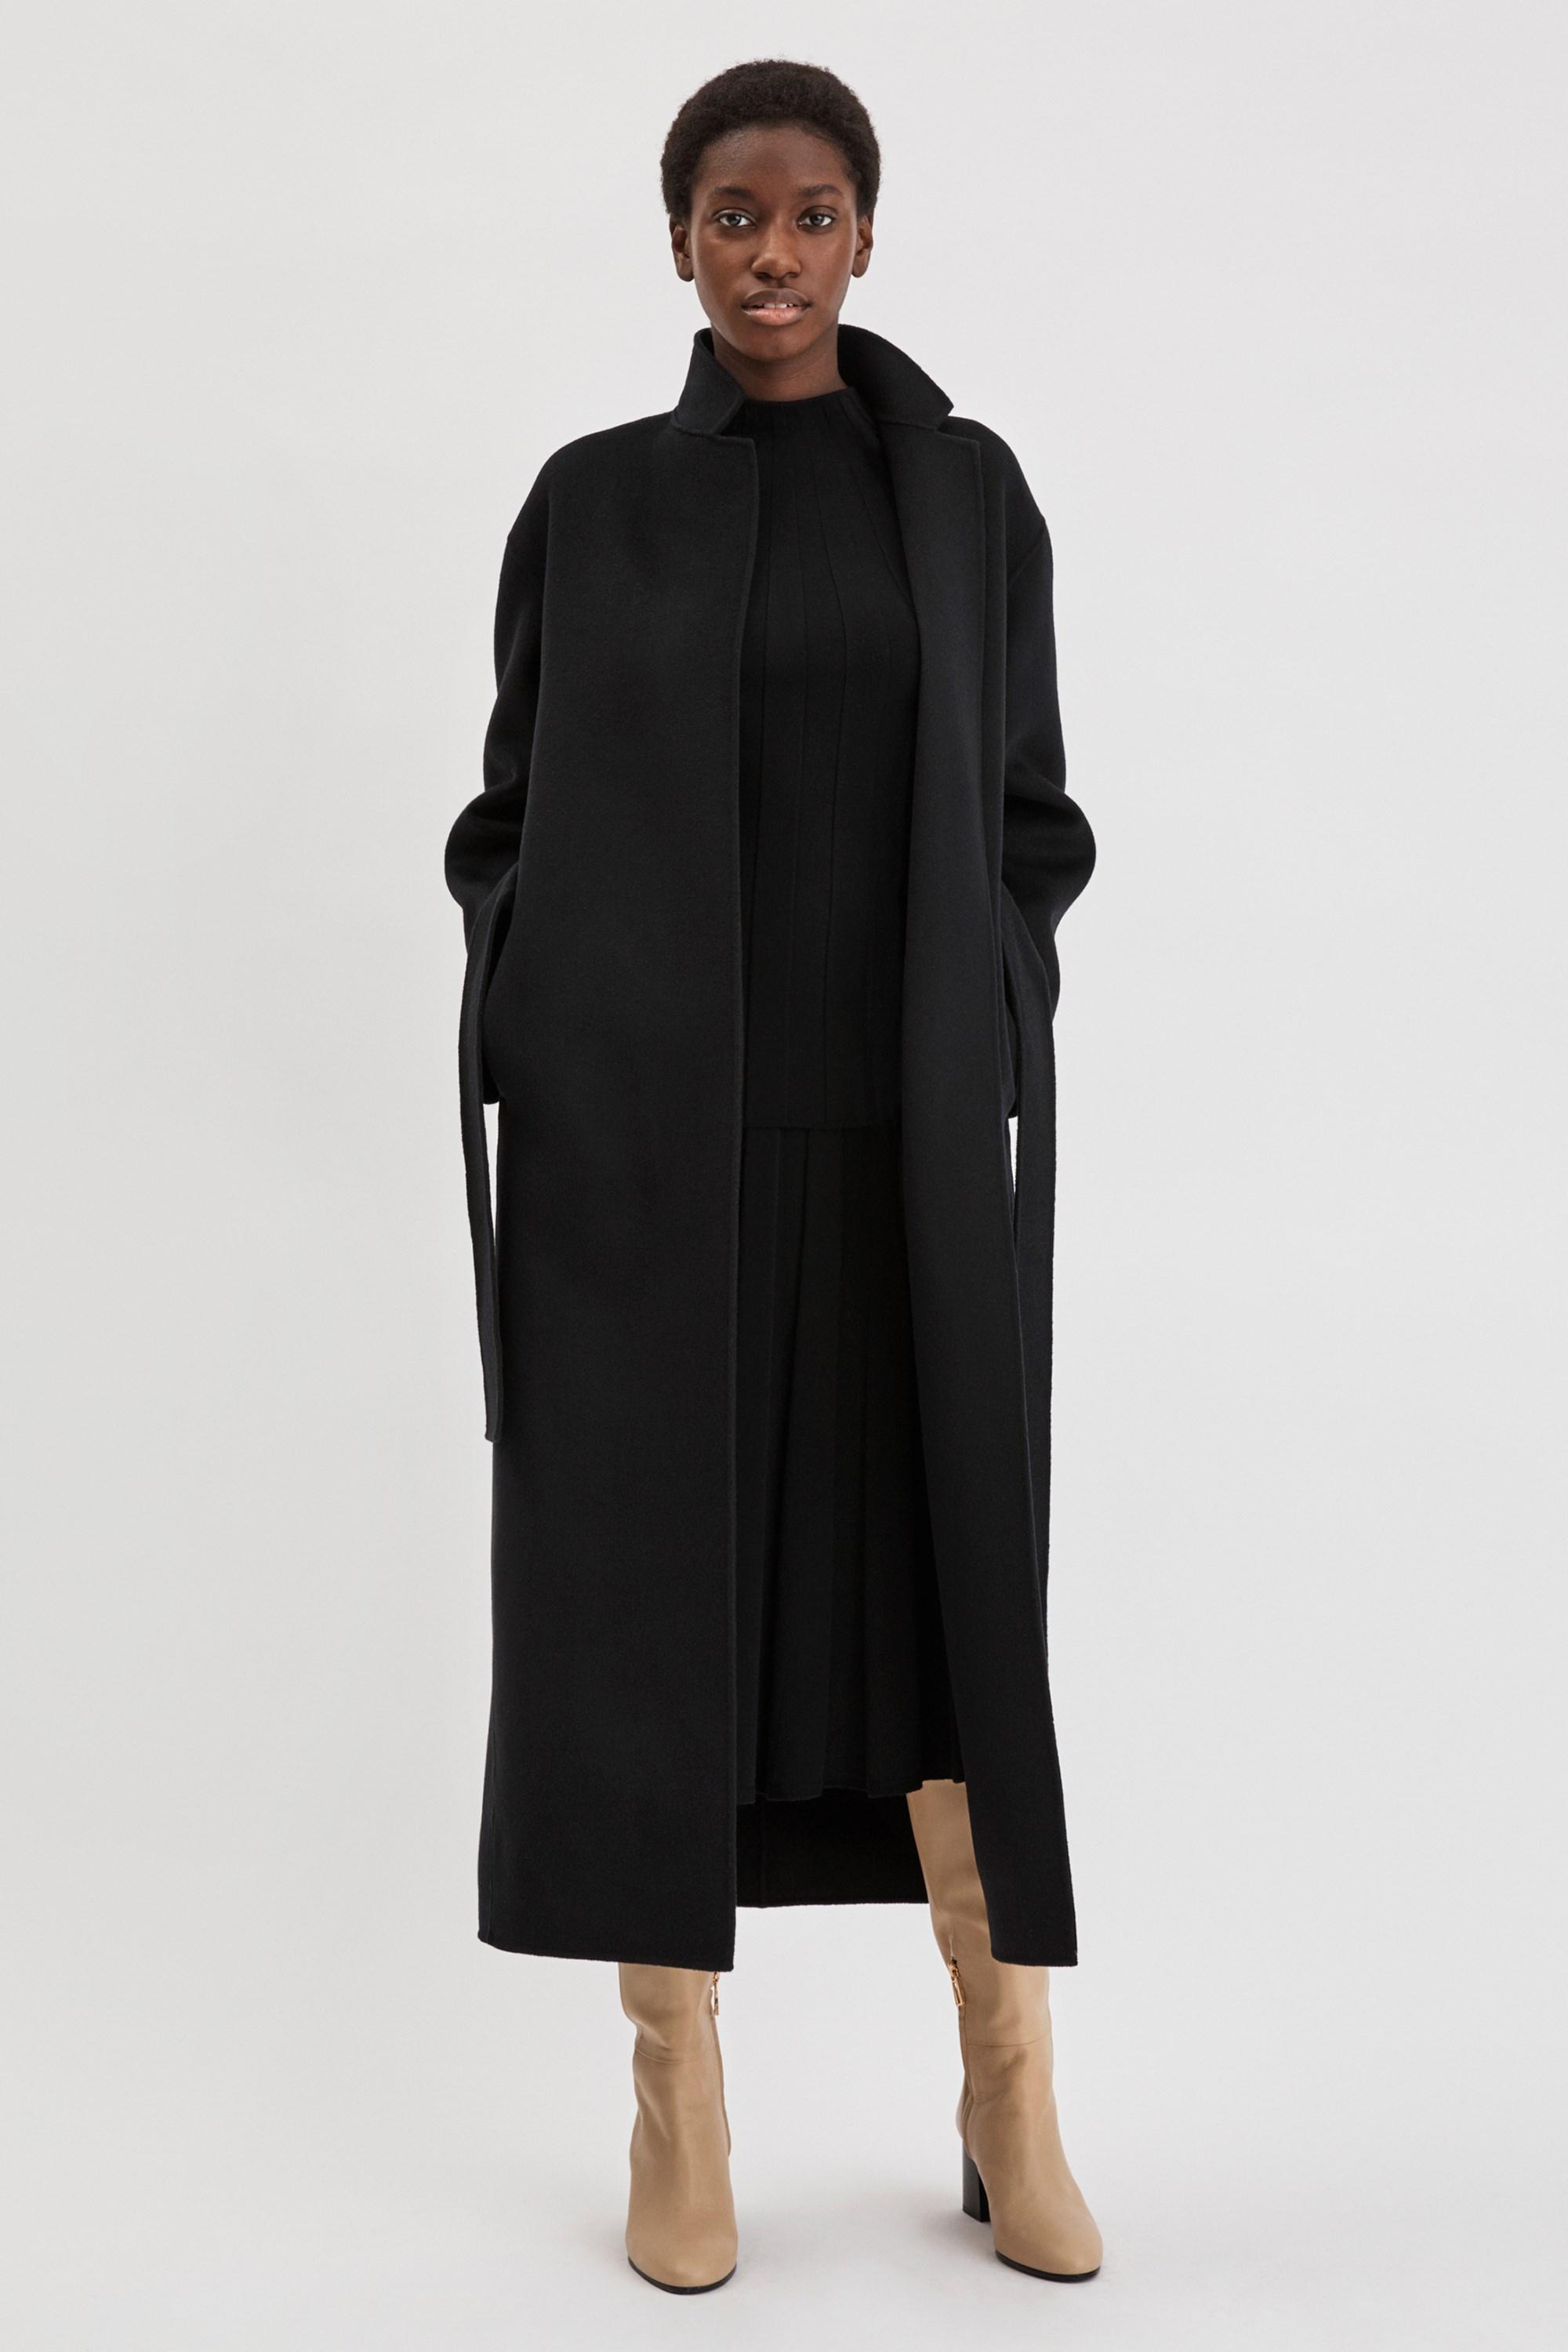 Filippa K Wool Alexa Coat in Black - Lyst